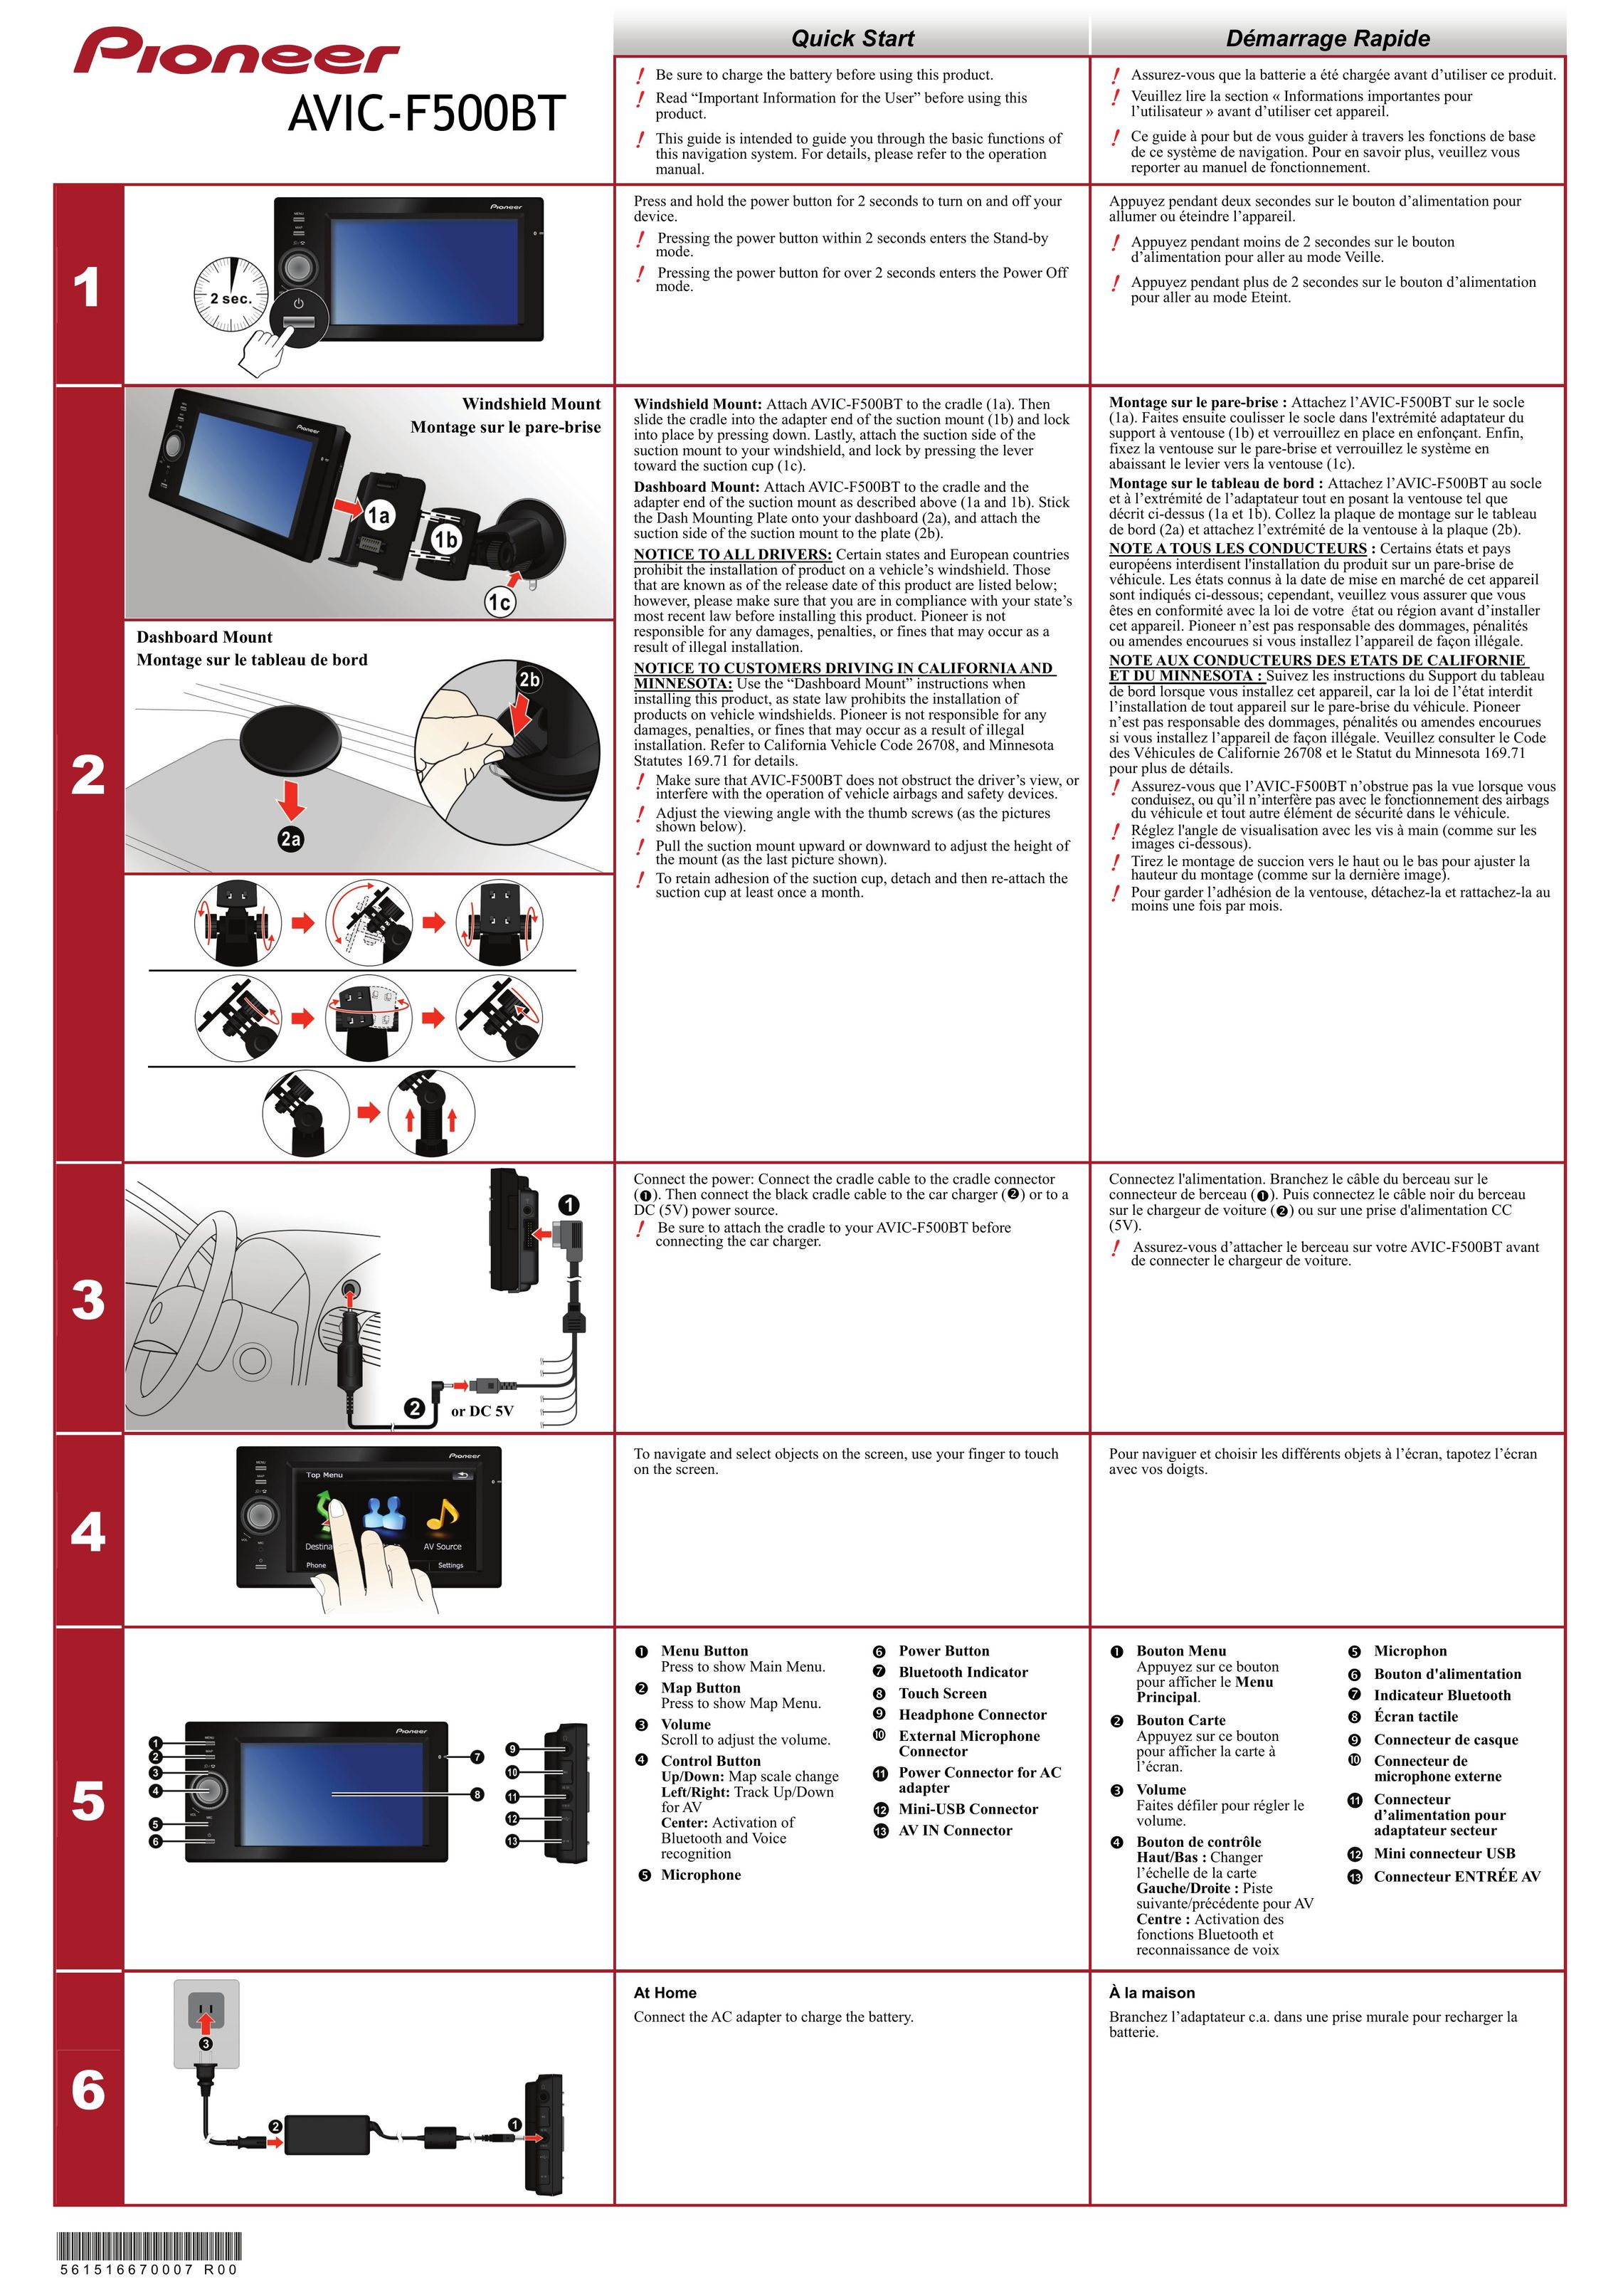 Pioneer Avic-F500BT Car Stereo System User Manual